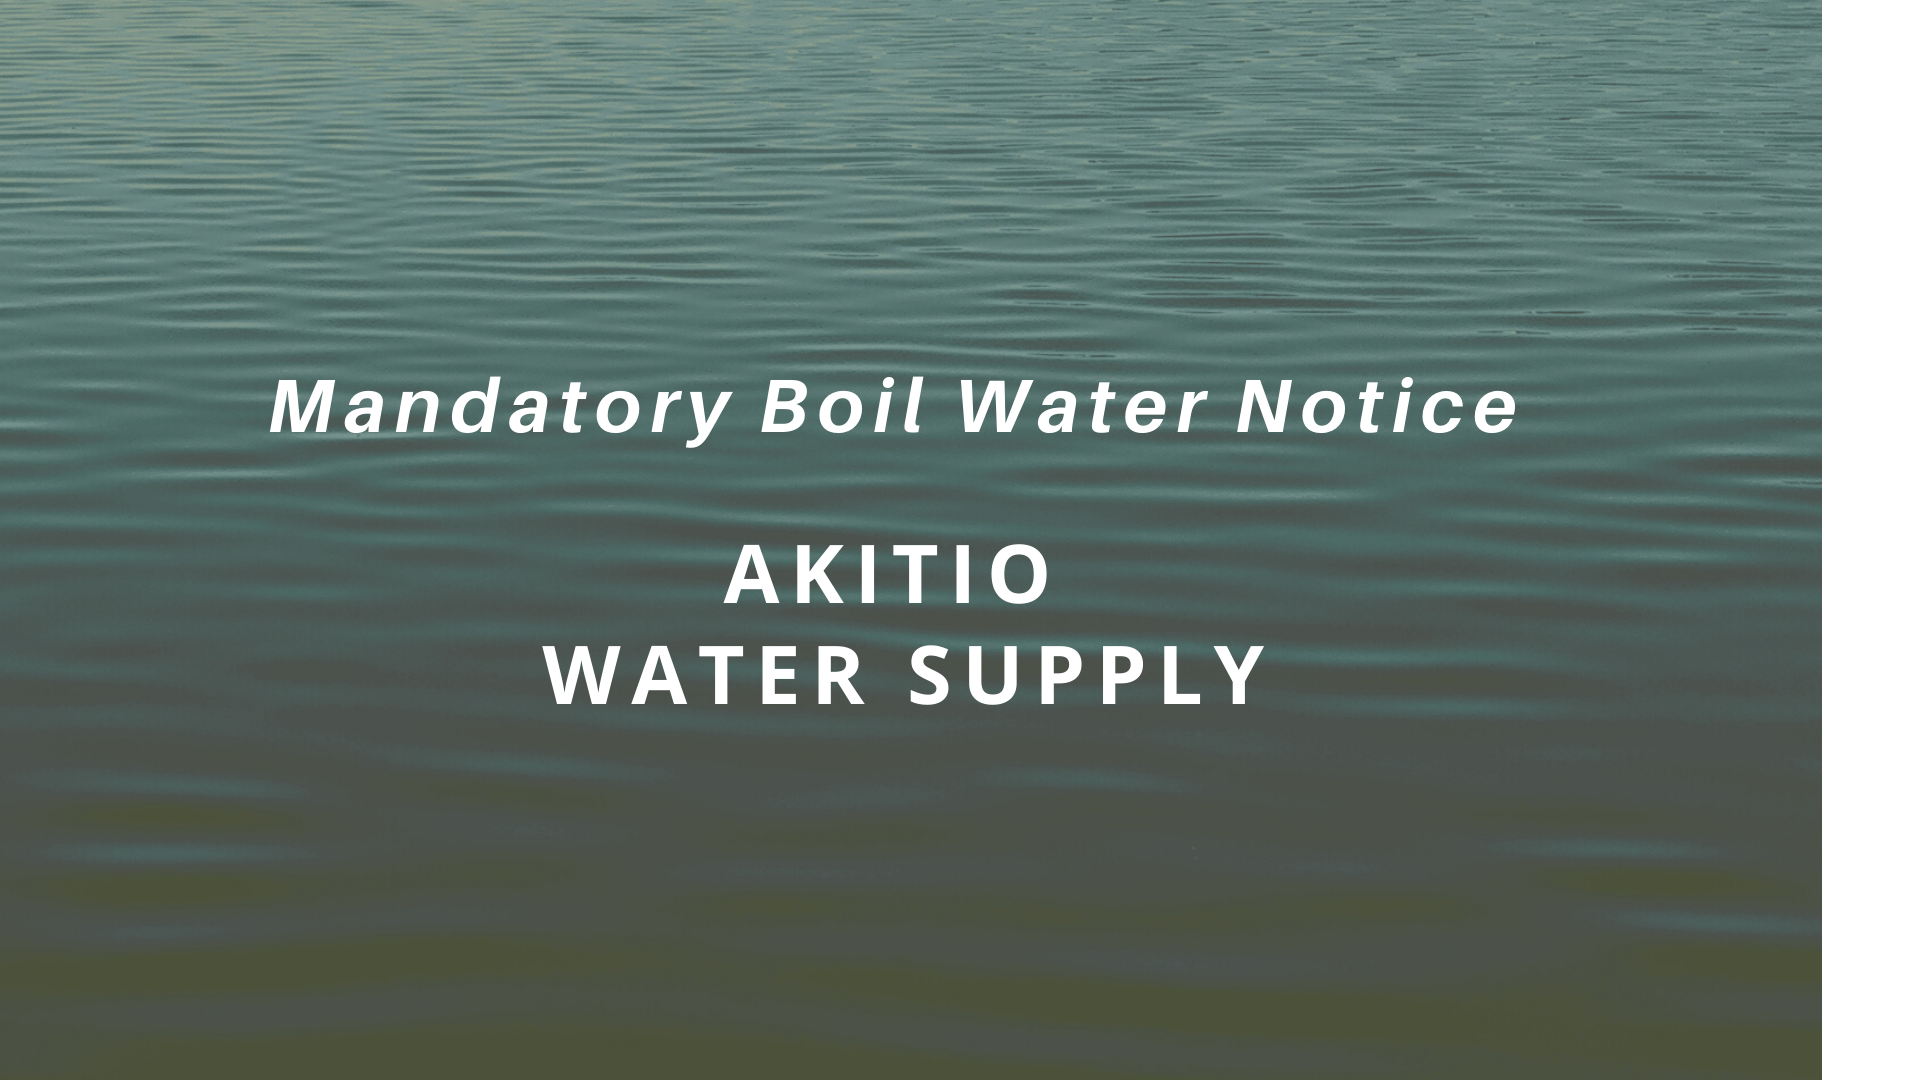 Mandatory Boil Water Notice: Akitio